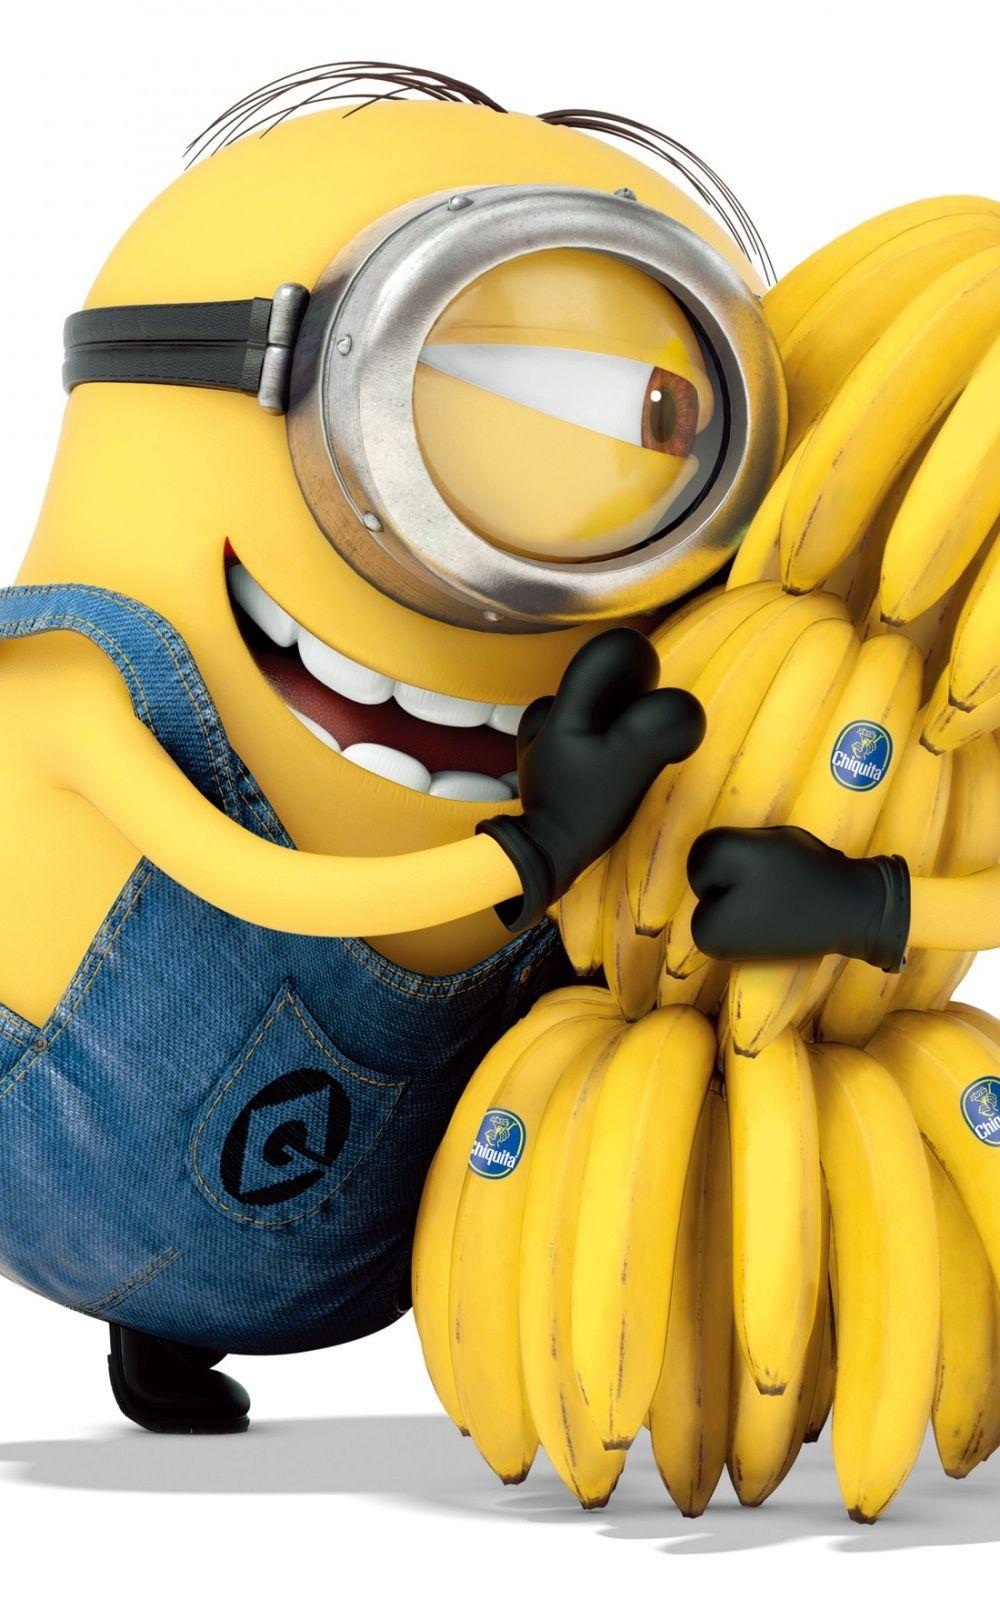 Despicable Me Minion Hugging Bananas Android Wallpaper free